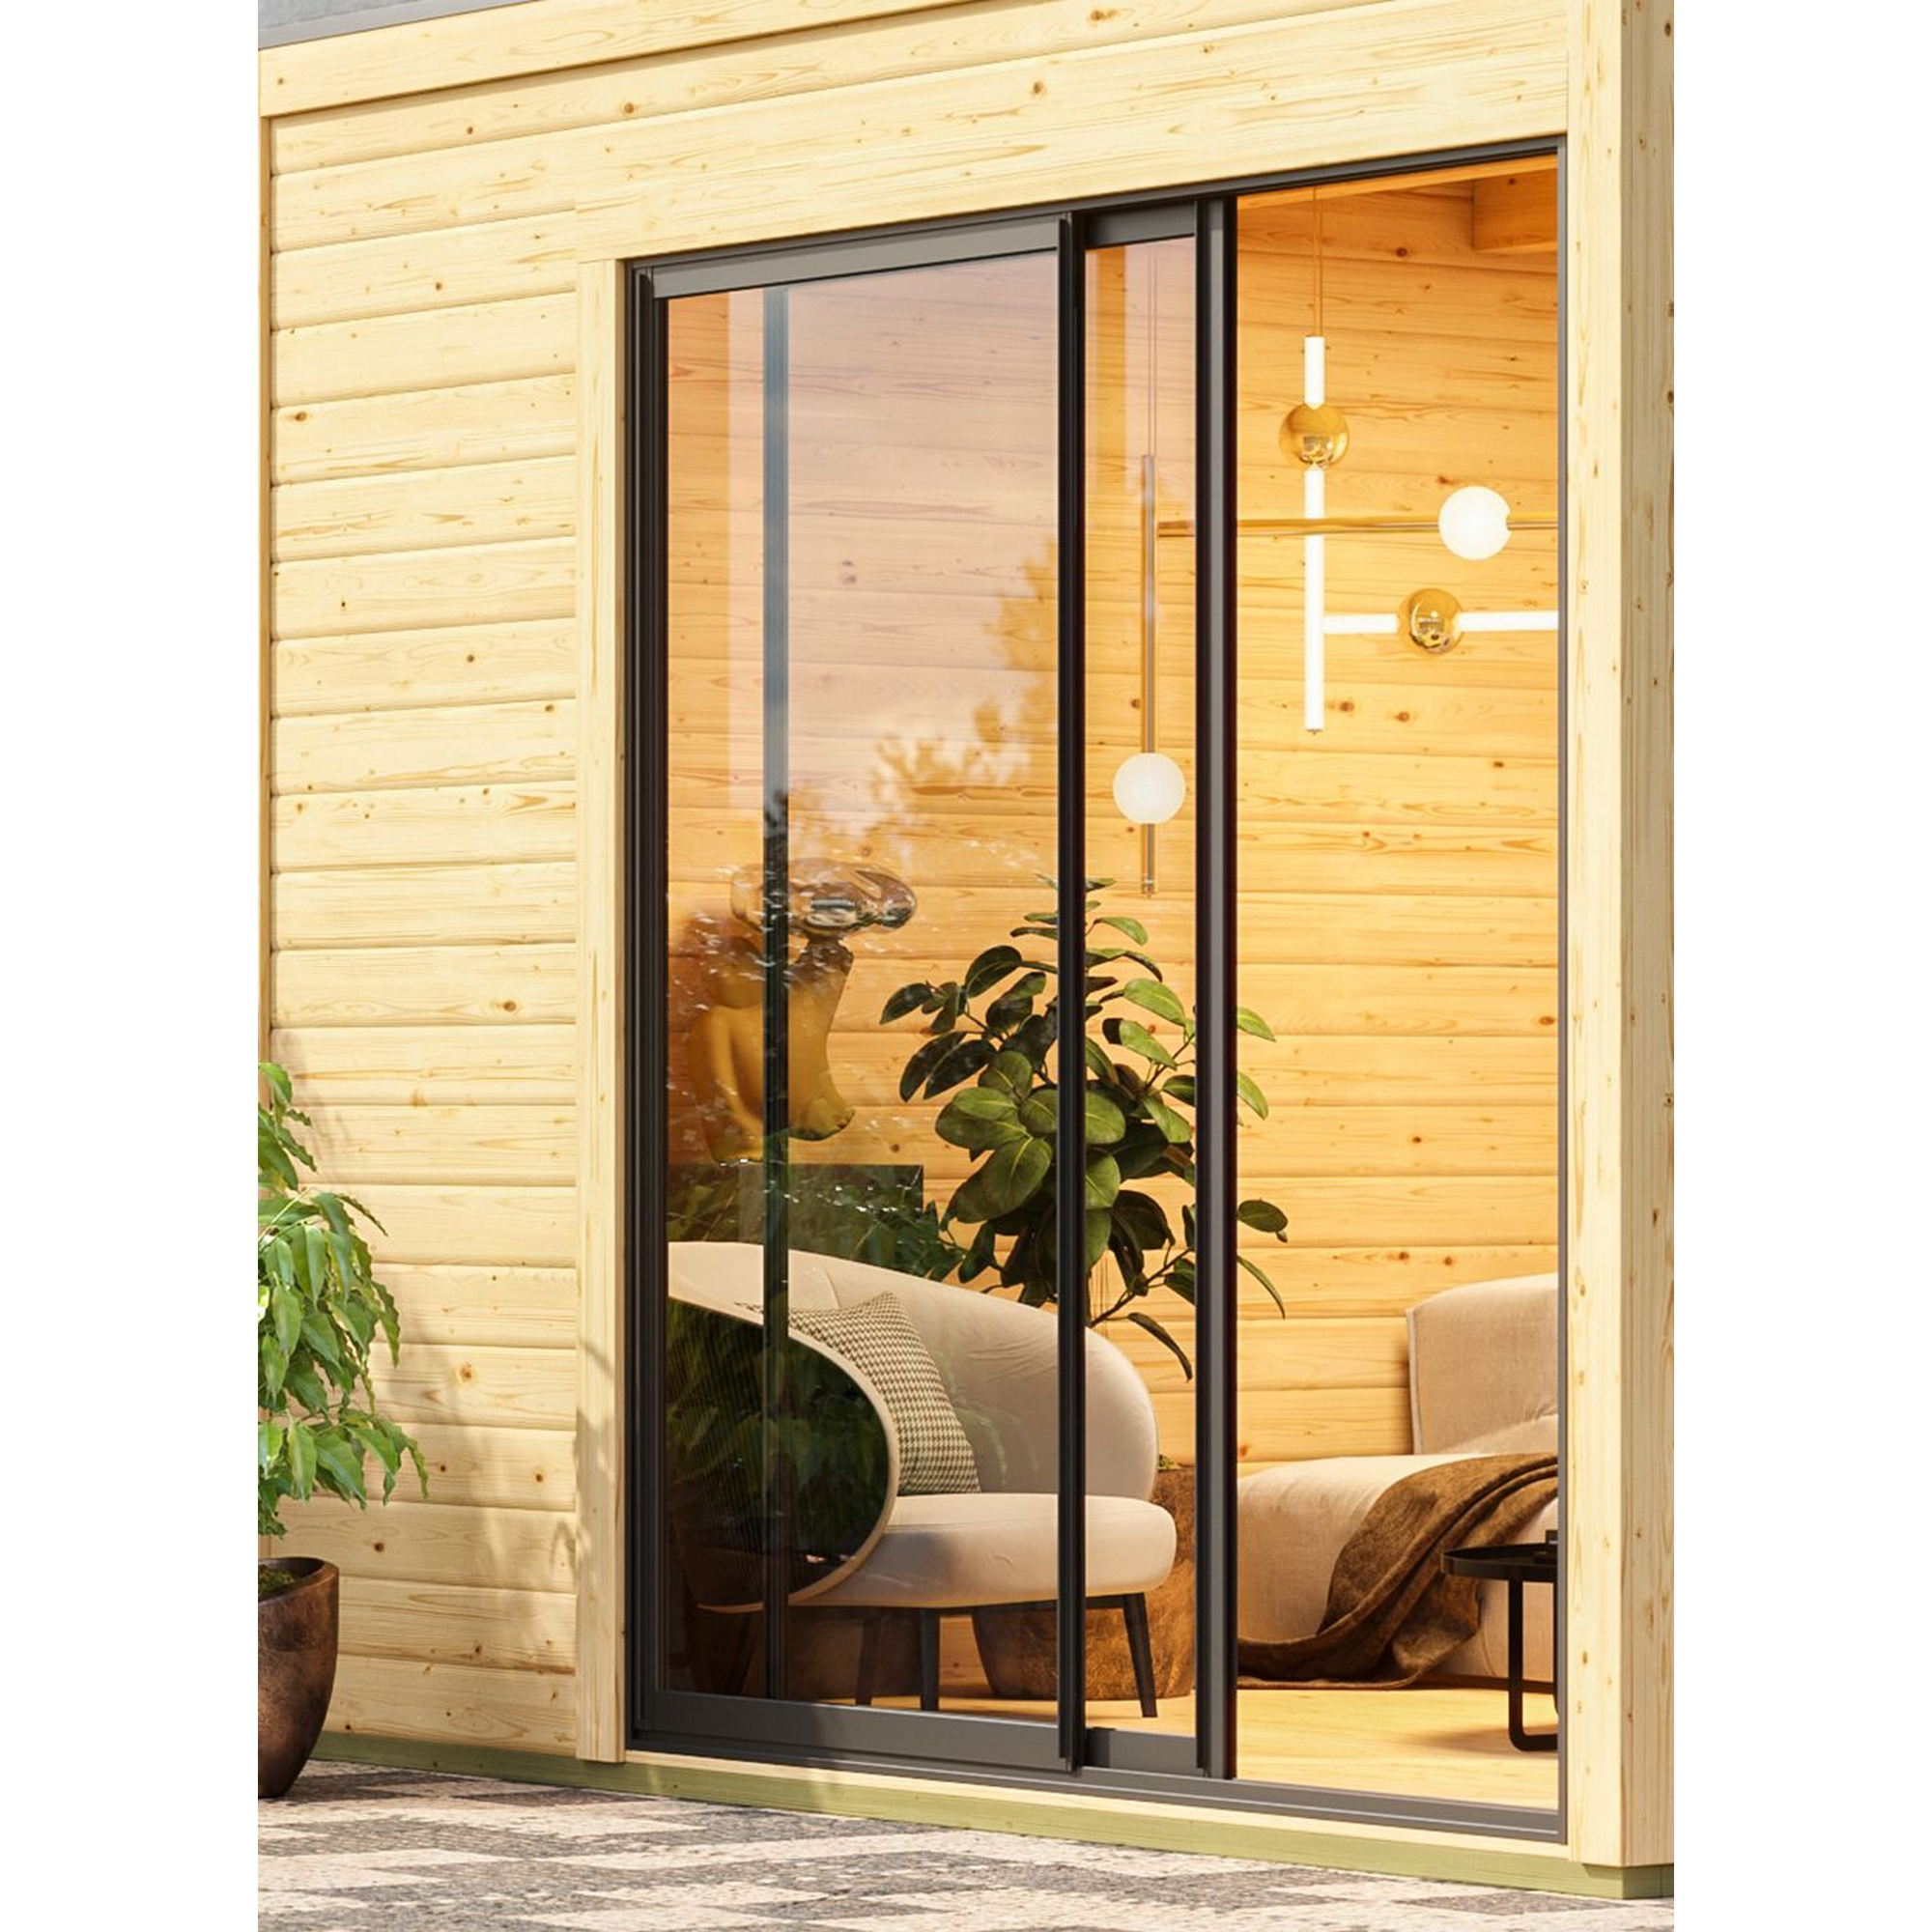 Gartenhaus mit Sauna 'Enrique 1 Variante A' naturbelassen 308 x 308 x 242 cm + product picture